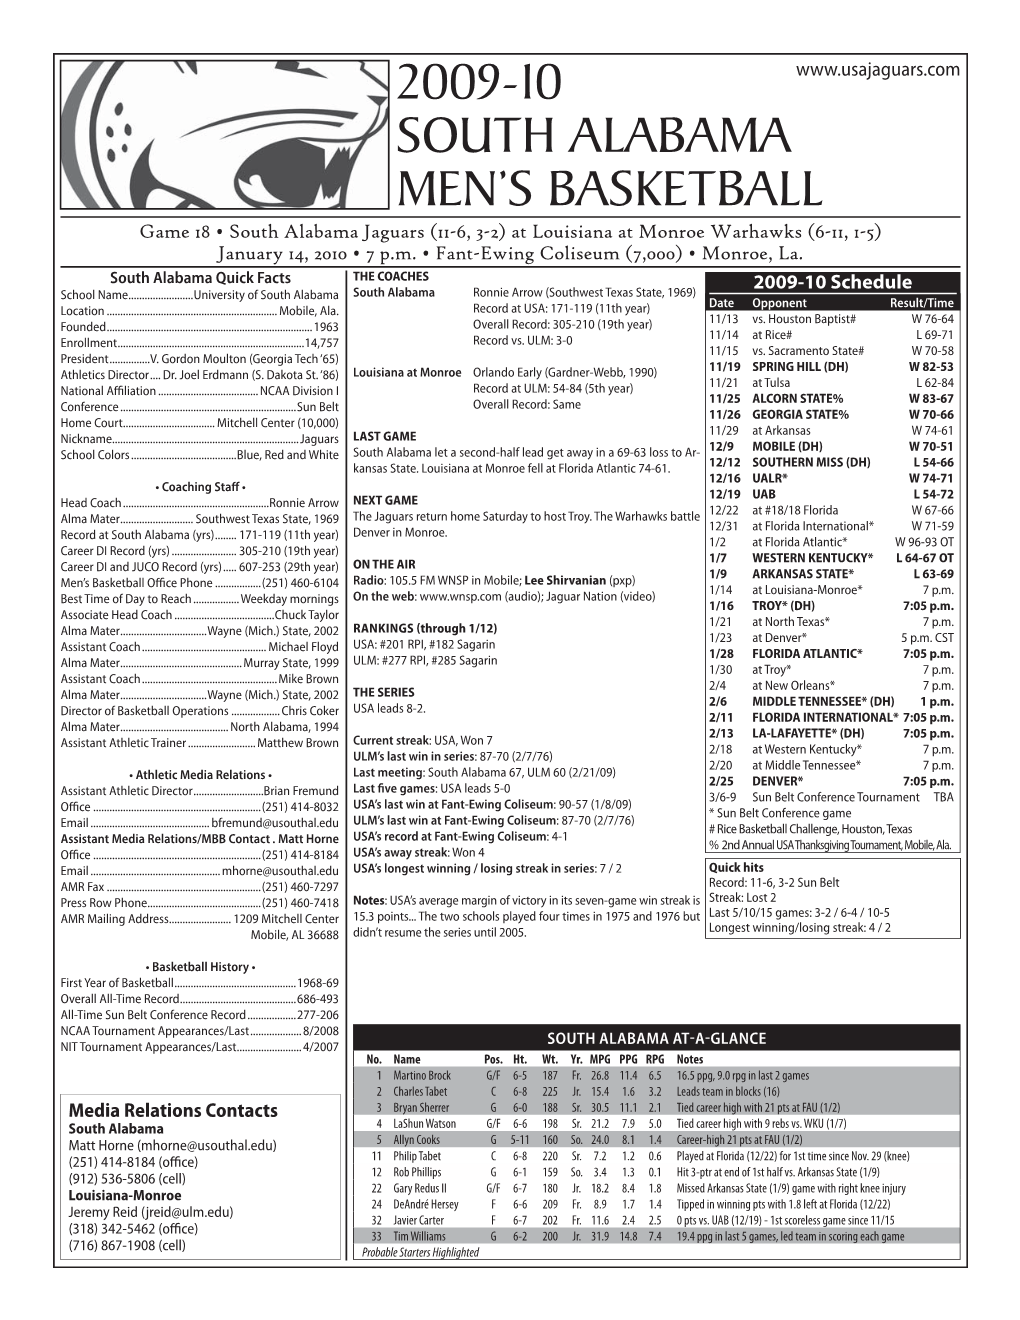 2009-10 South Alabama Men's Basketball